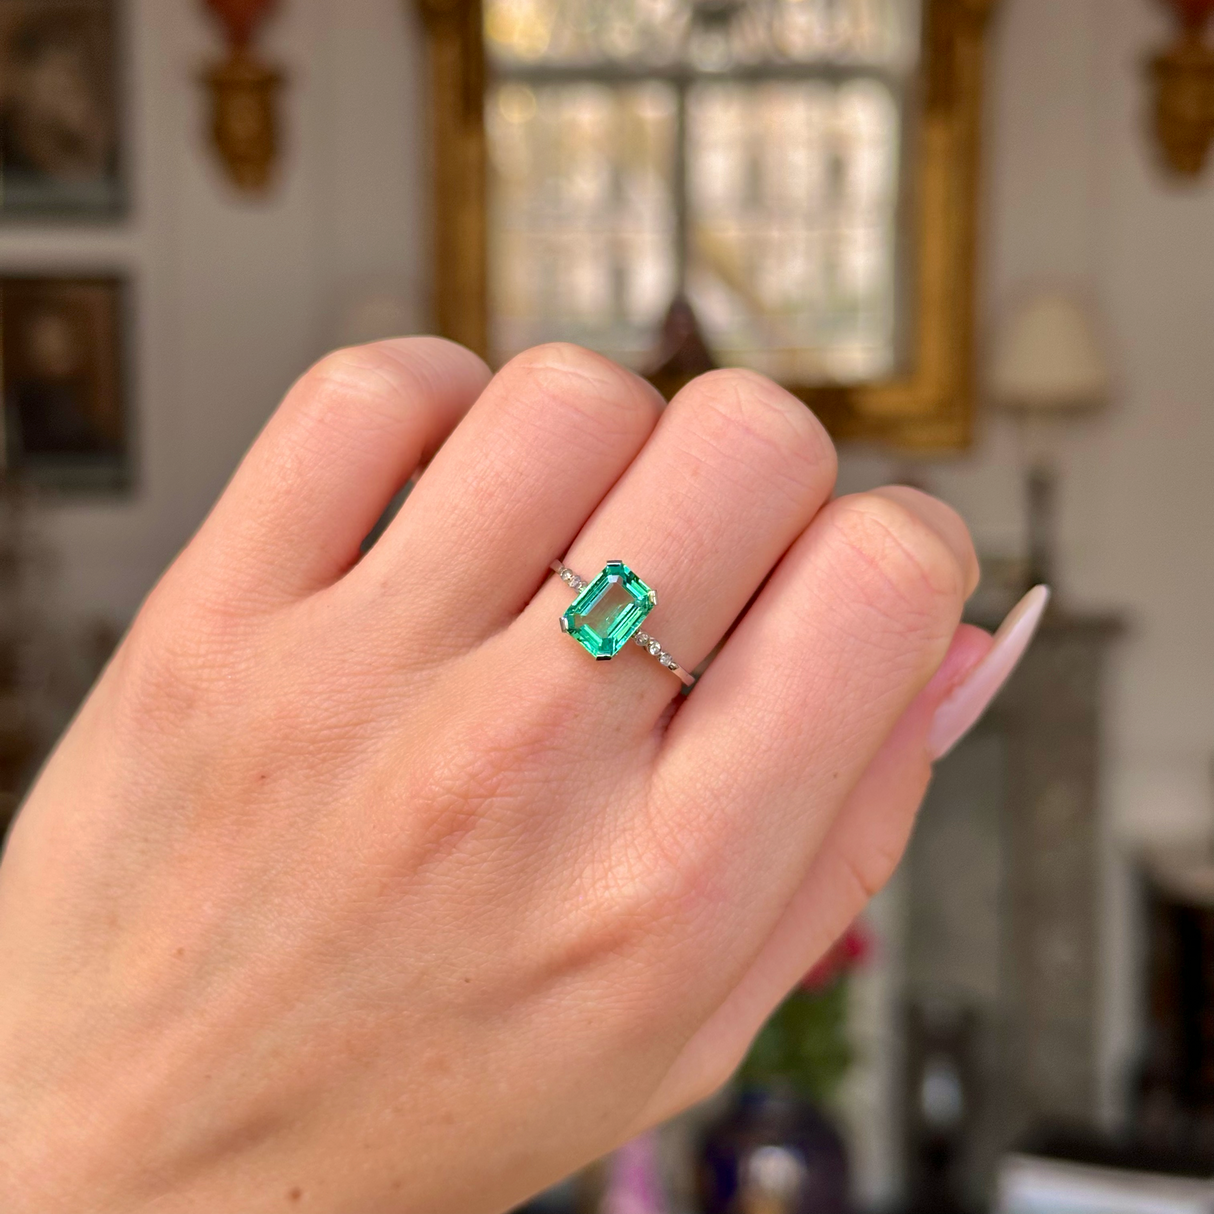 Edwardian single stone ring worn on closed hand. 